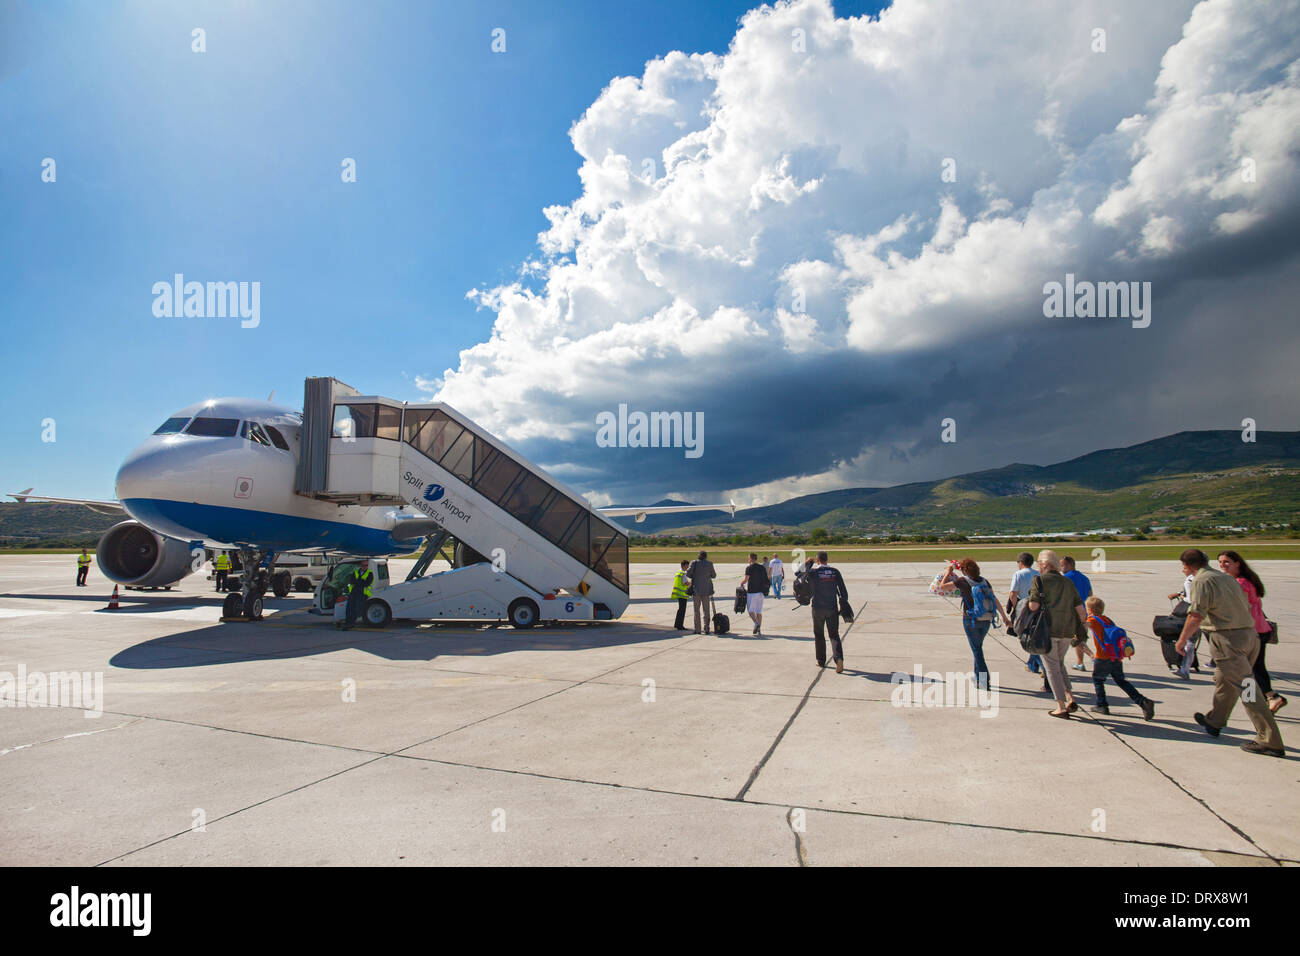 SPLIT, CROATIA - JUN 6: Croatia Airlines Airbus A319 parked on a runway of Split Airport Stock Photo